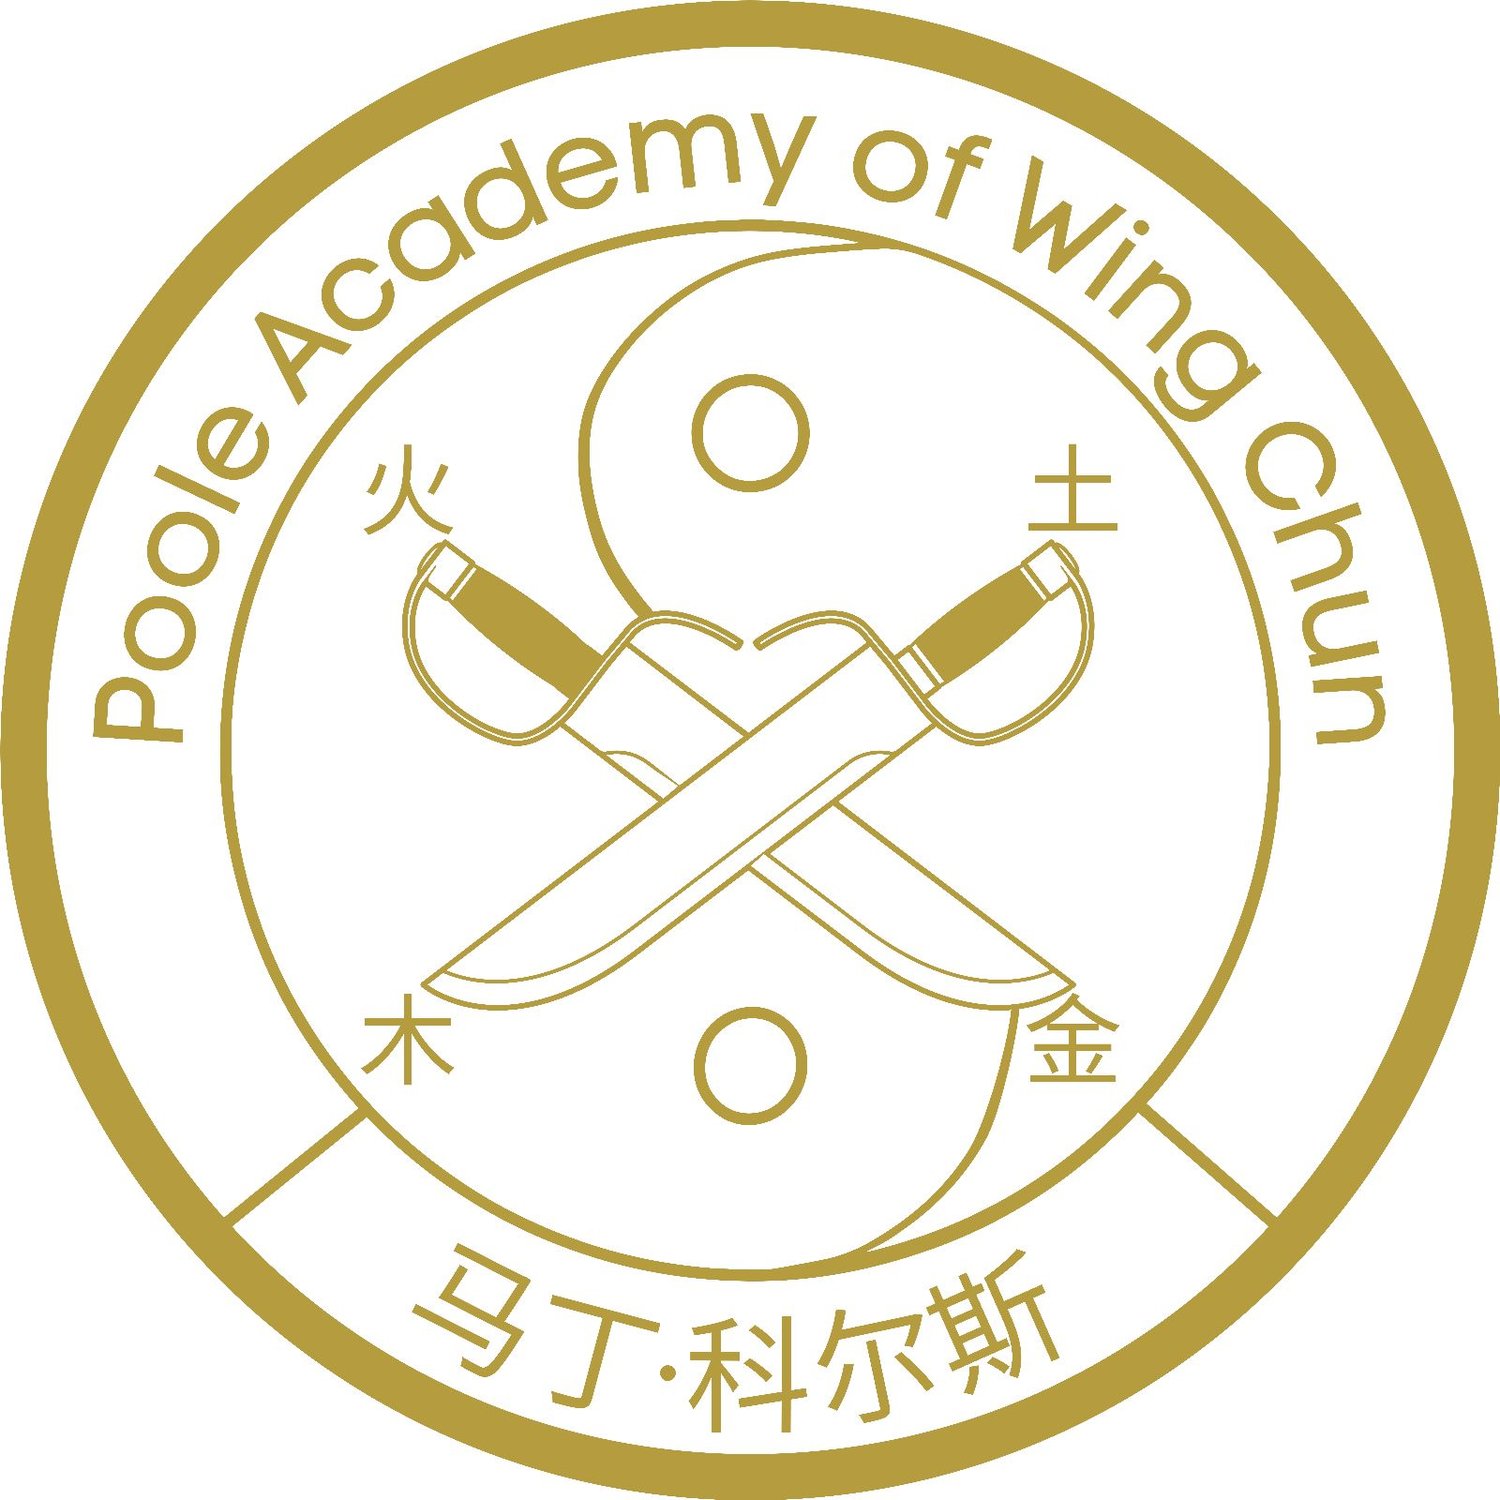 Poole Academy of Wing Chun